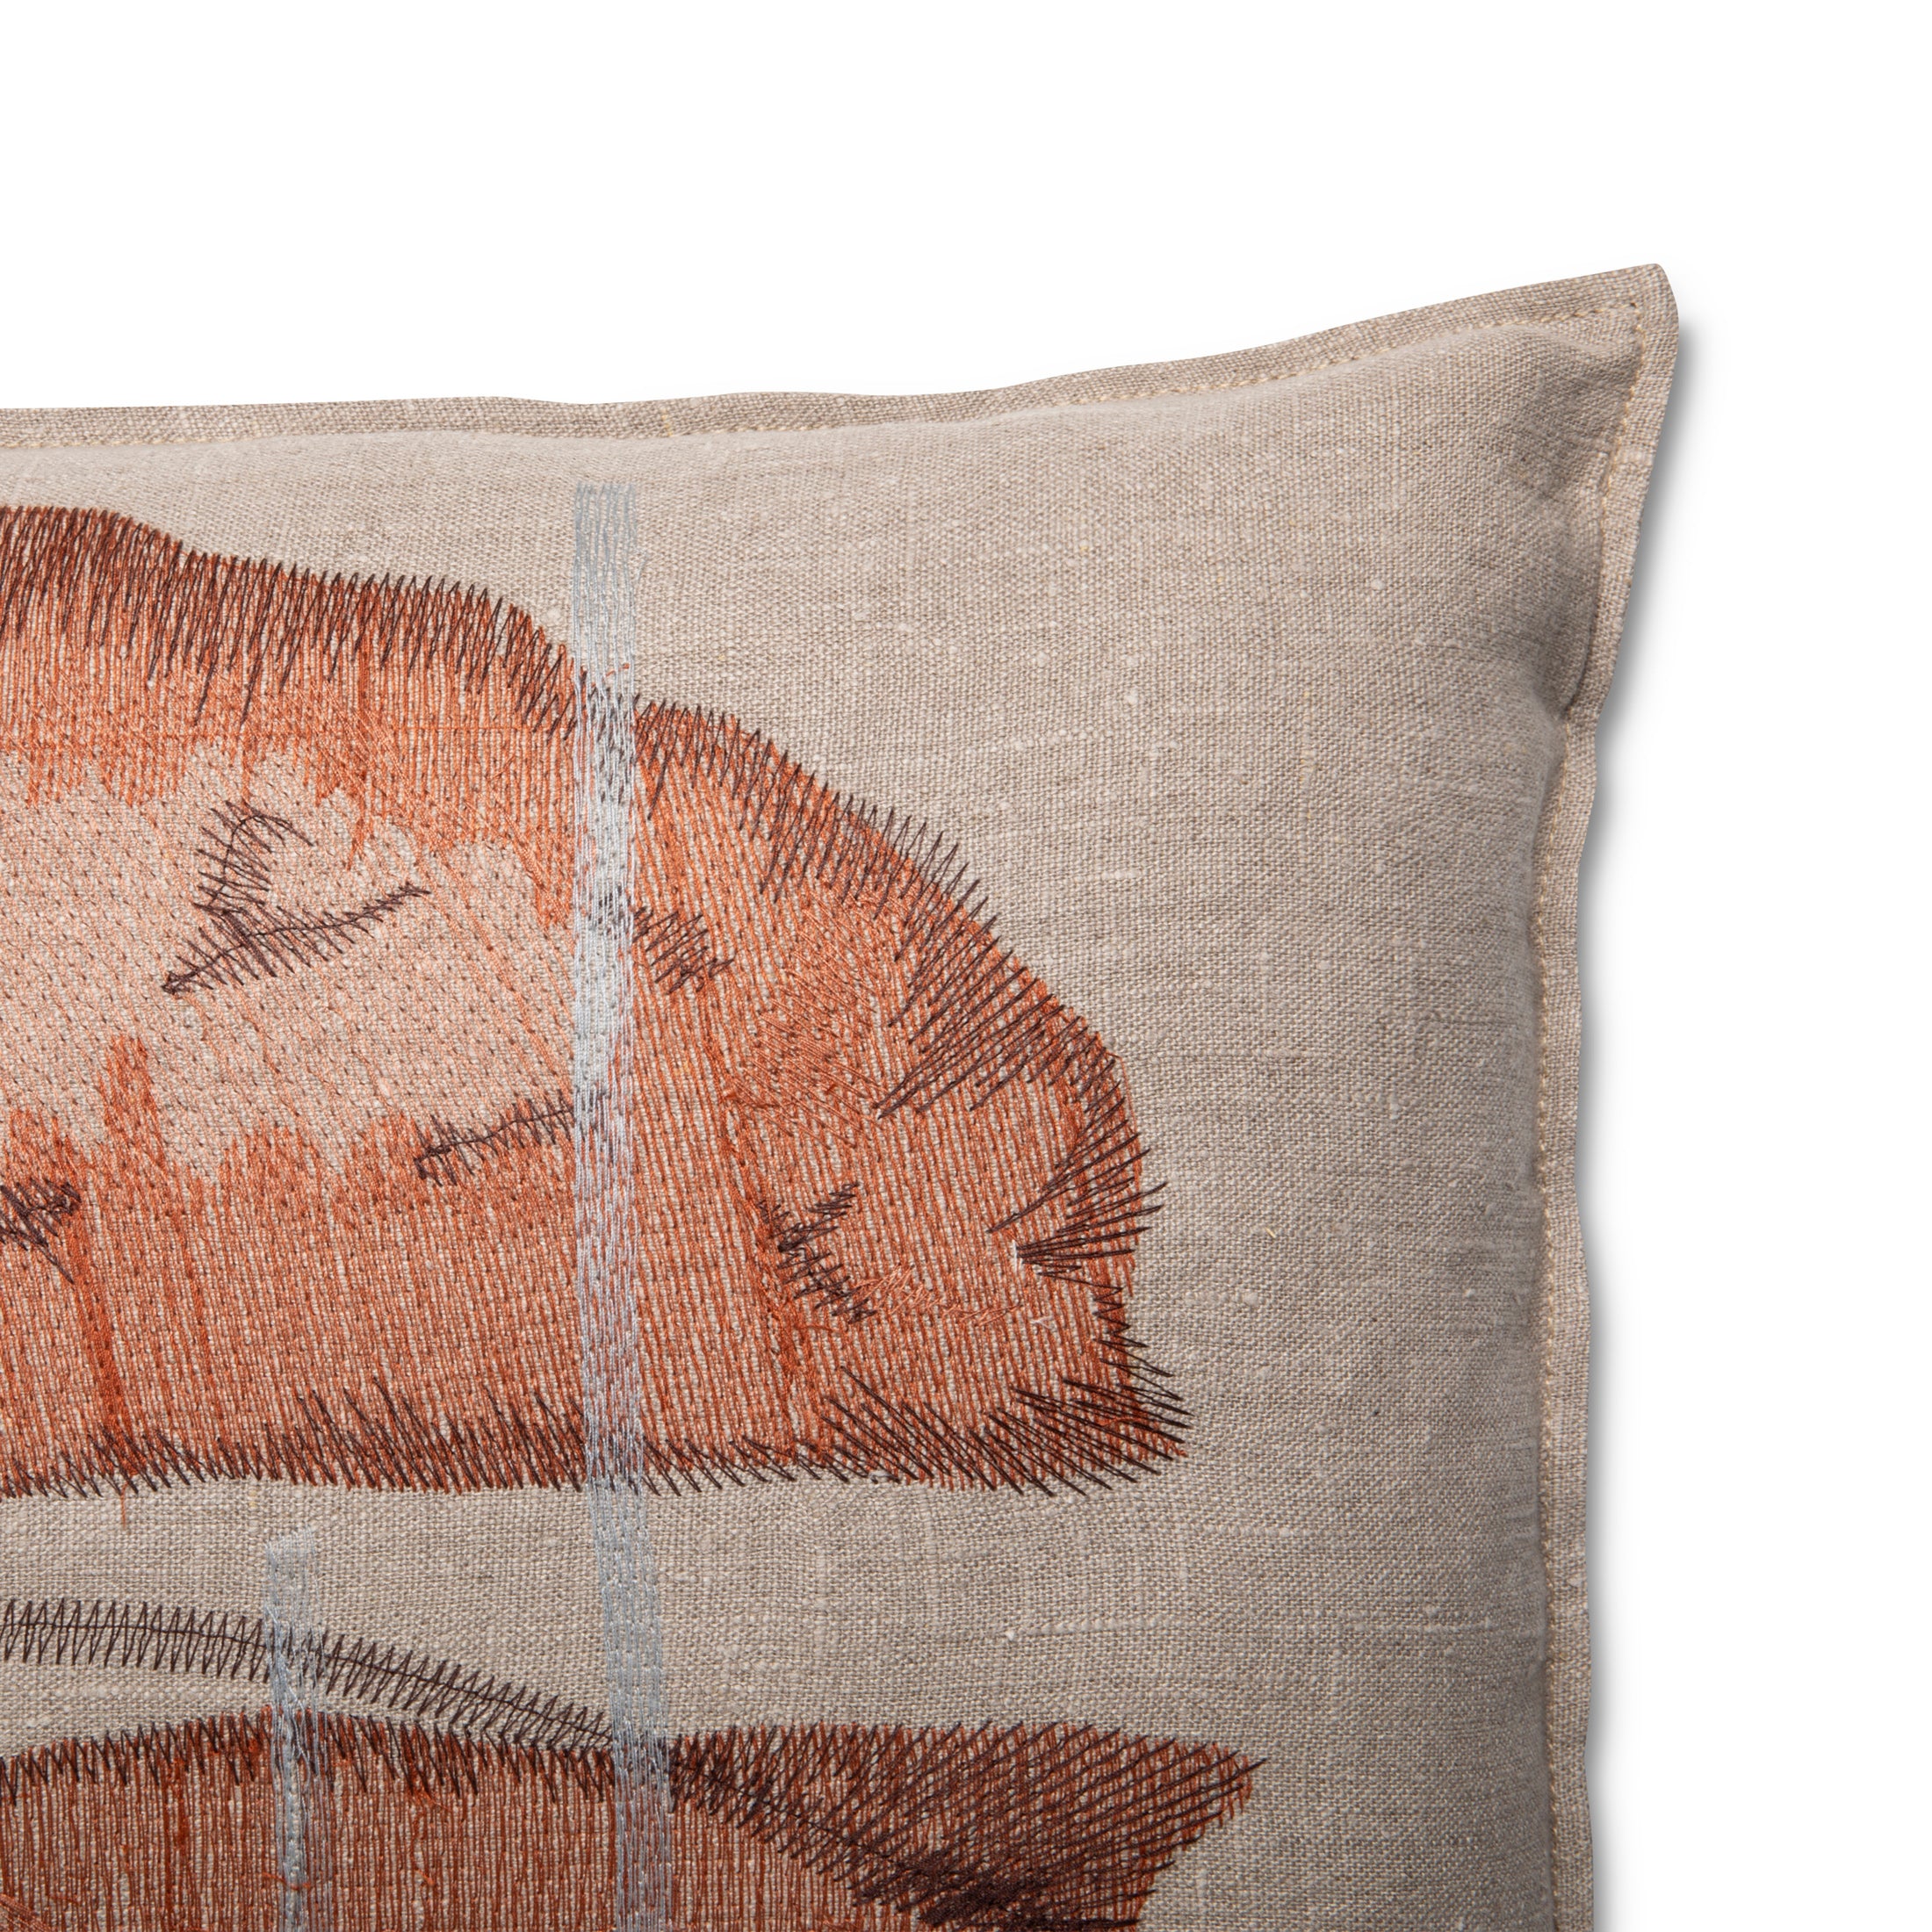 Okavango Rust Embroidered Pillow